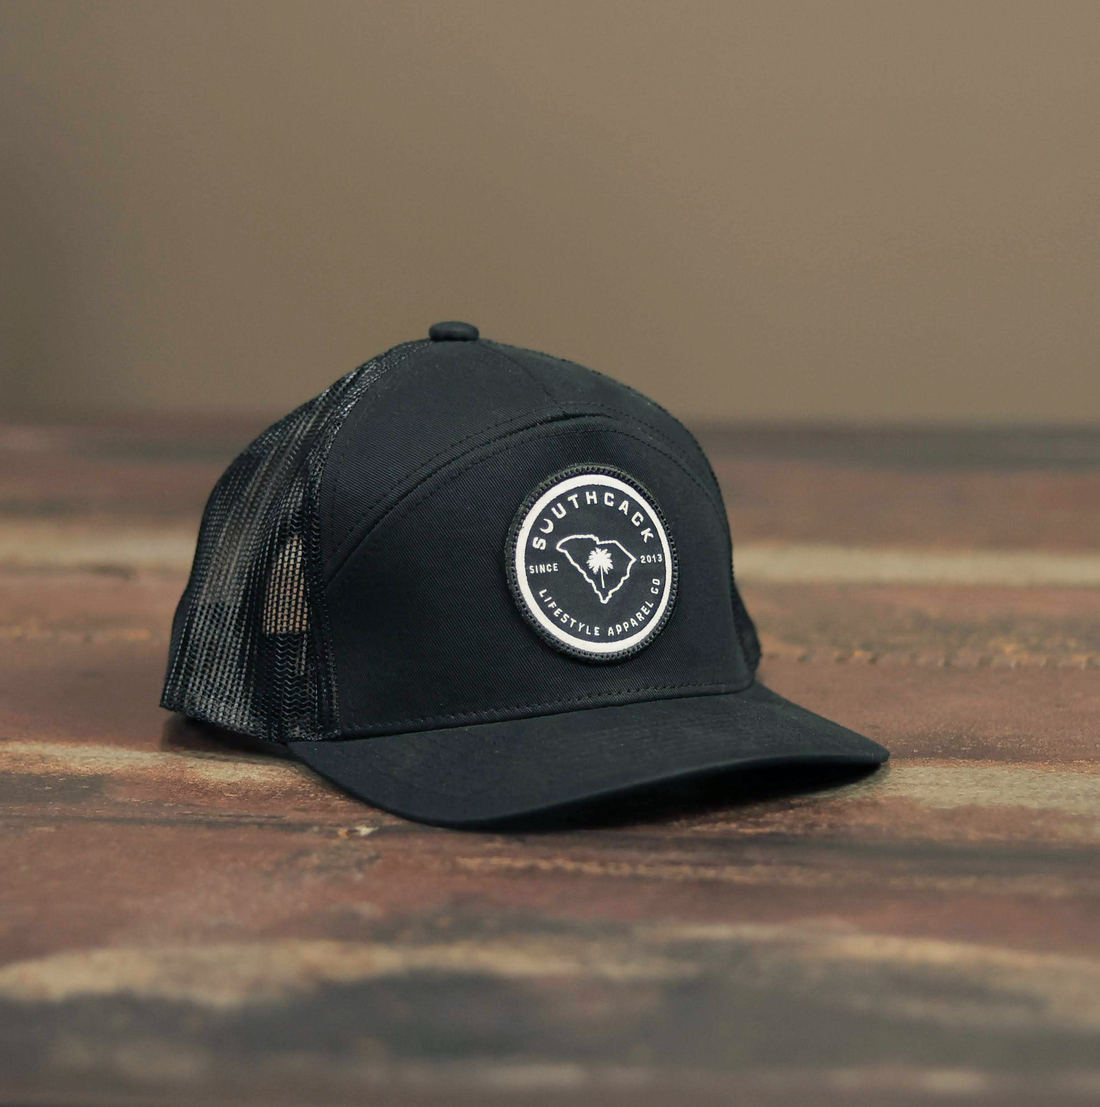 black hat by SouthCack